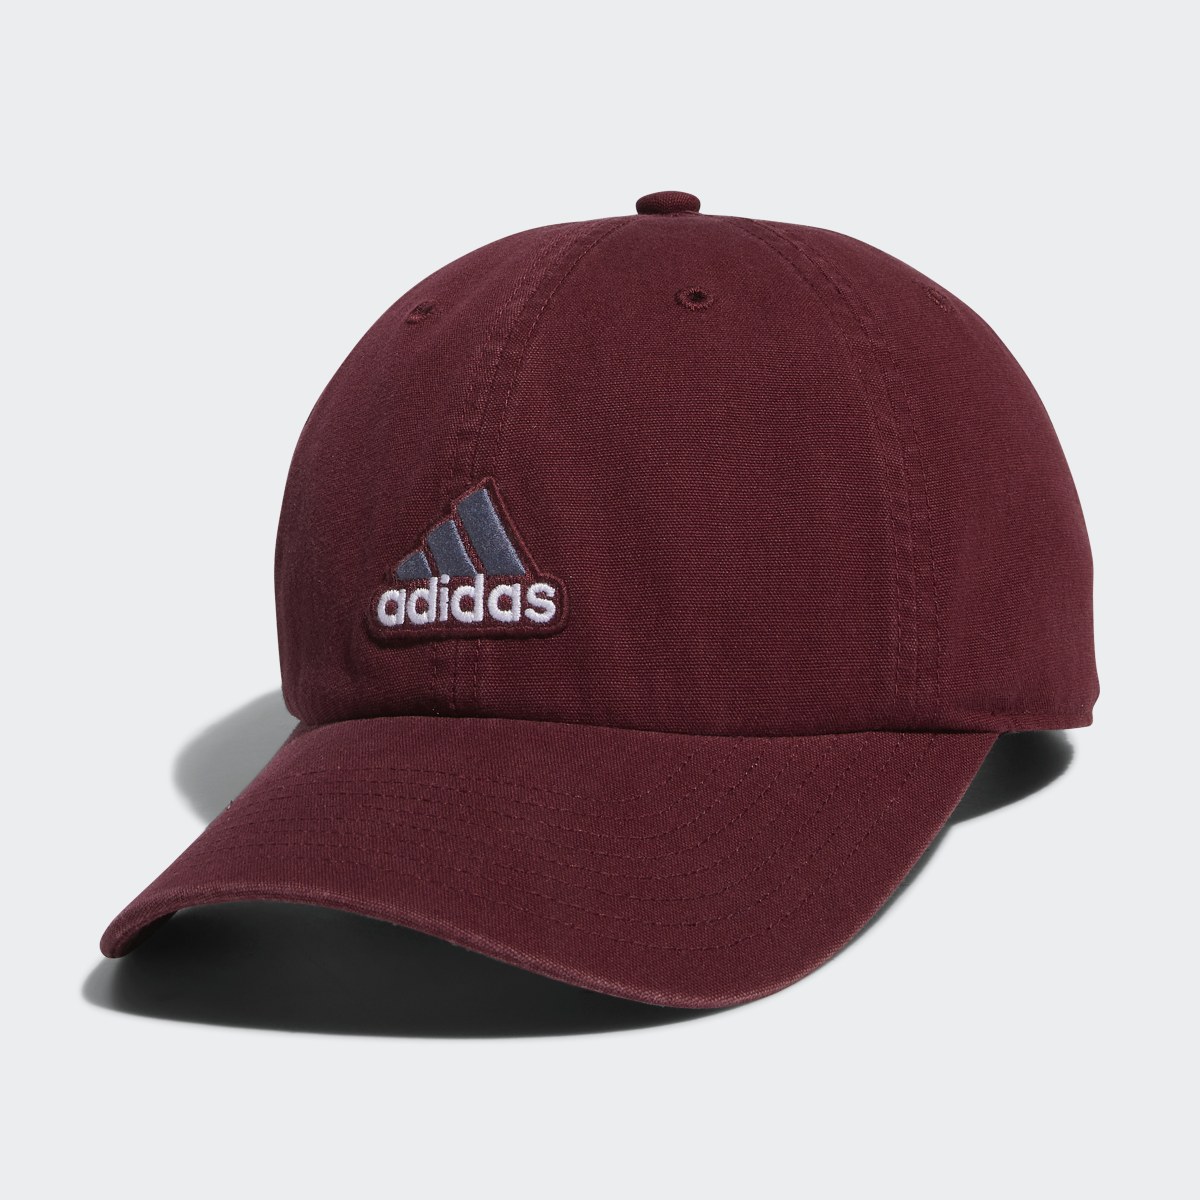 Adidas Ultimate Hat. 4